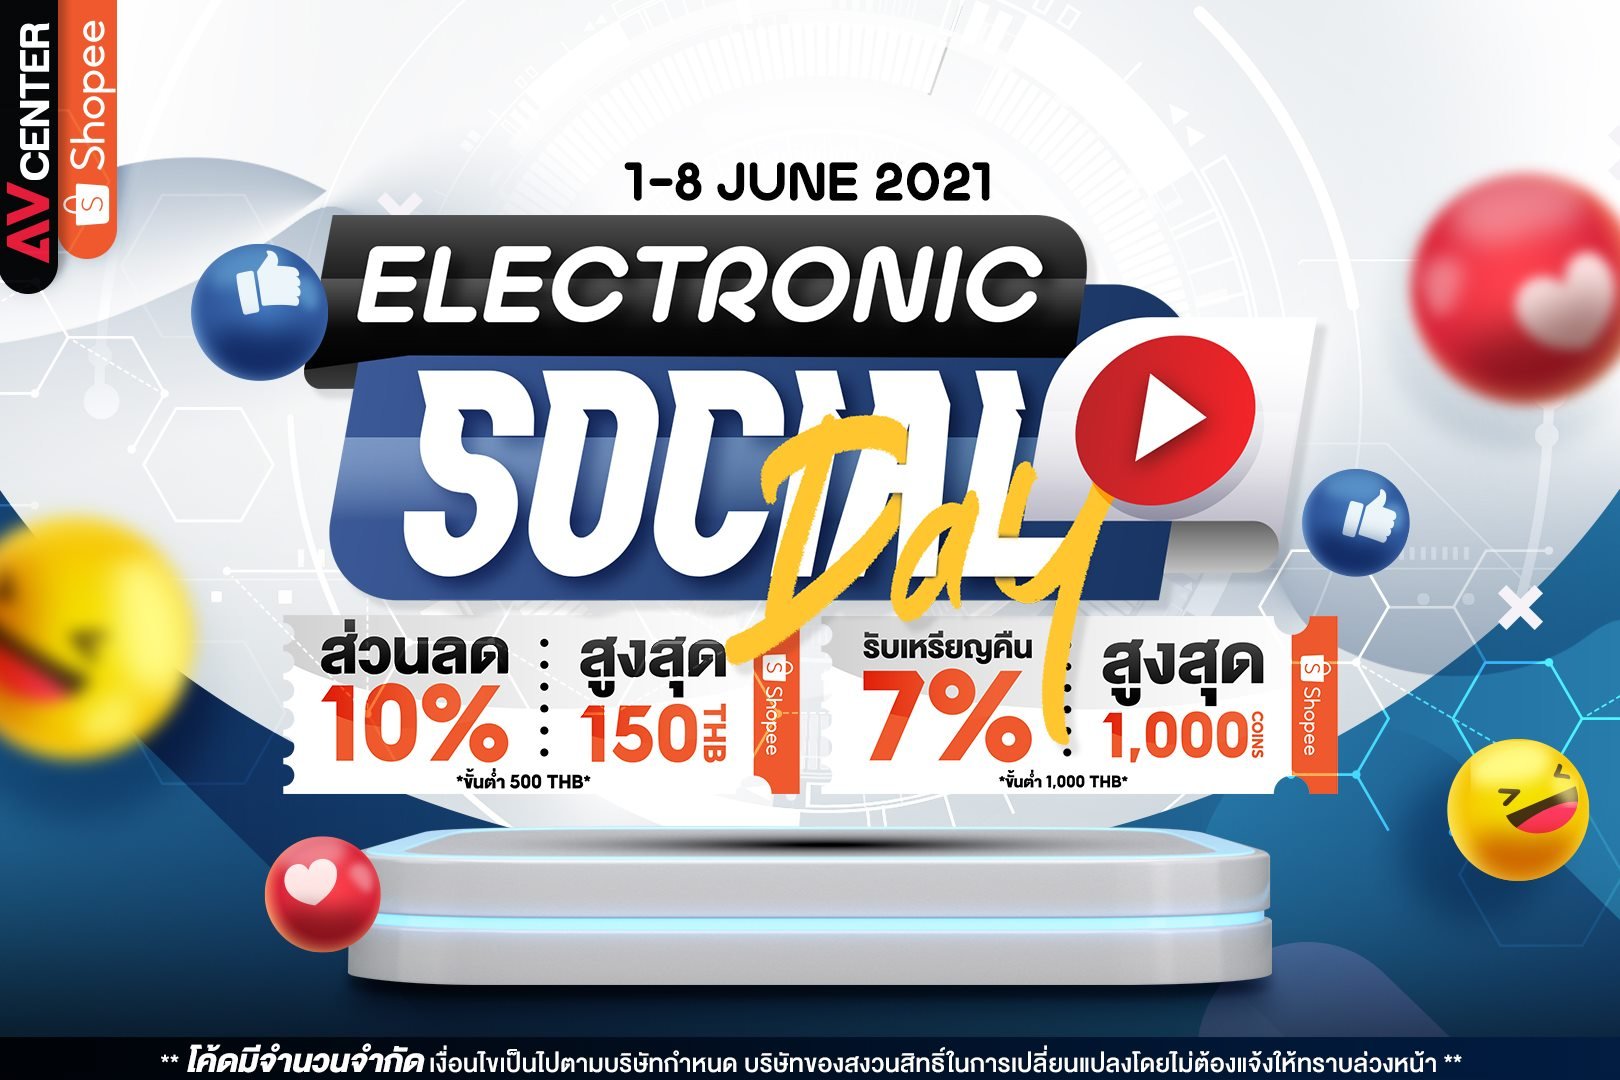 Electronic Social day เปย์หนักสูงสุด 50%